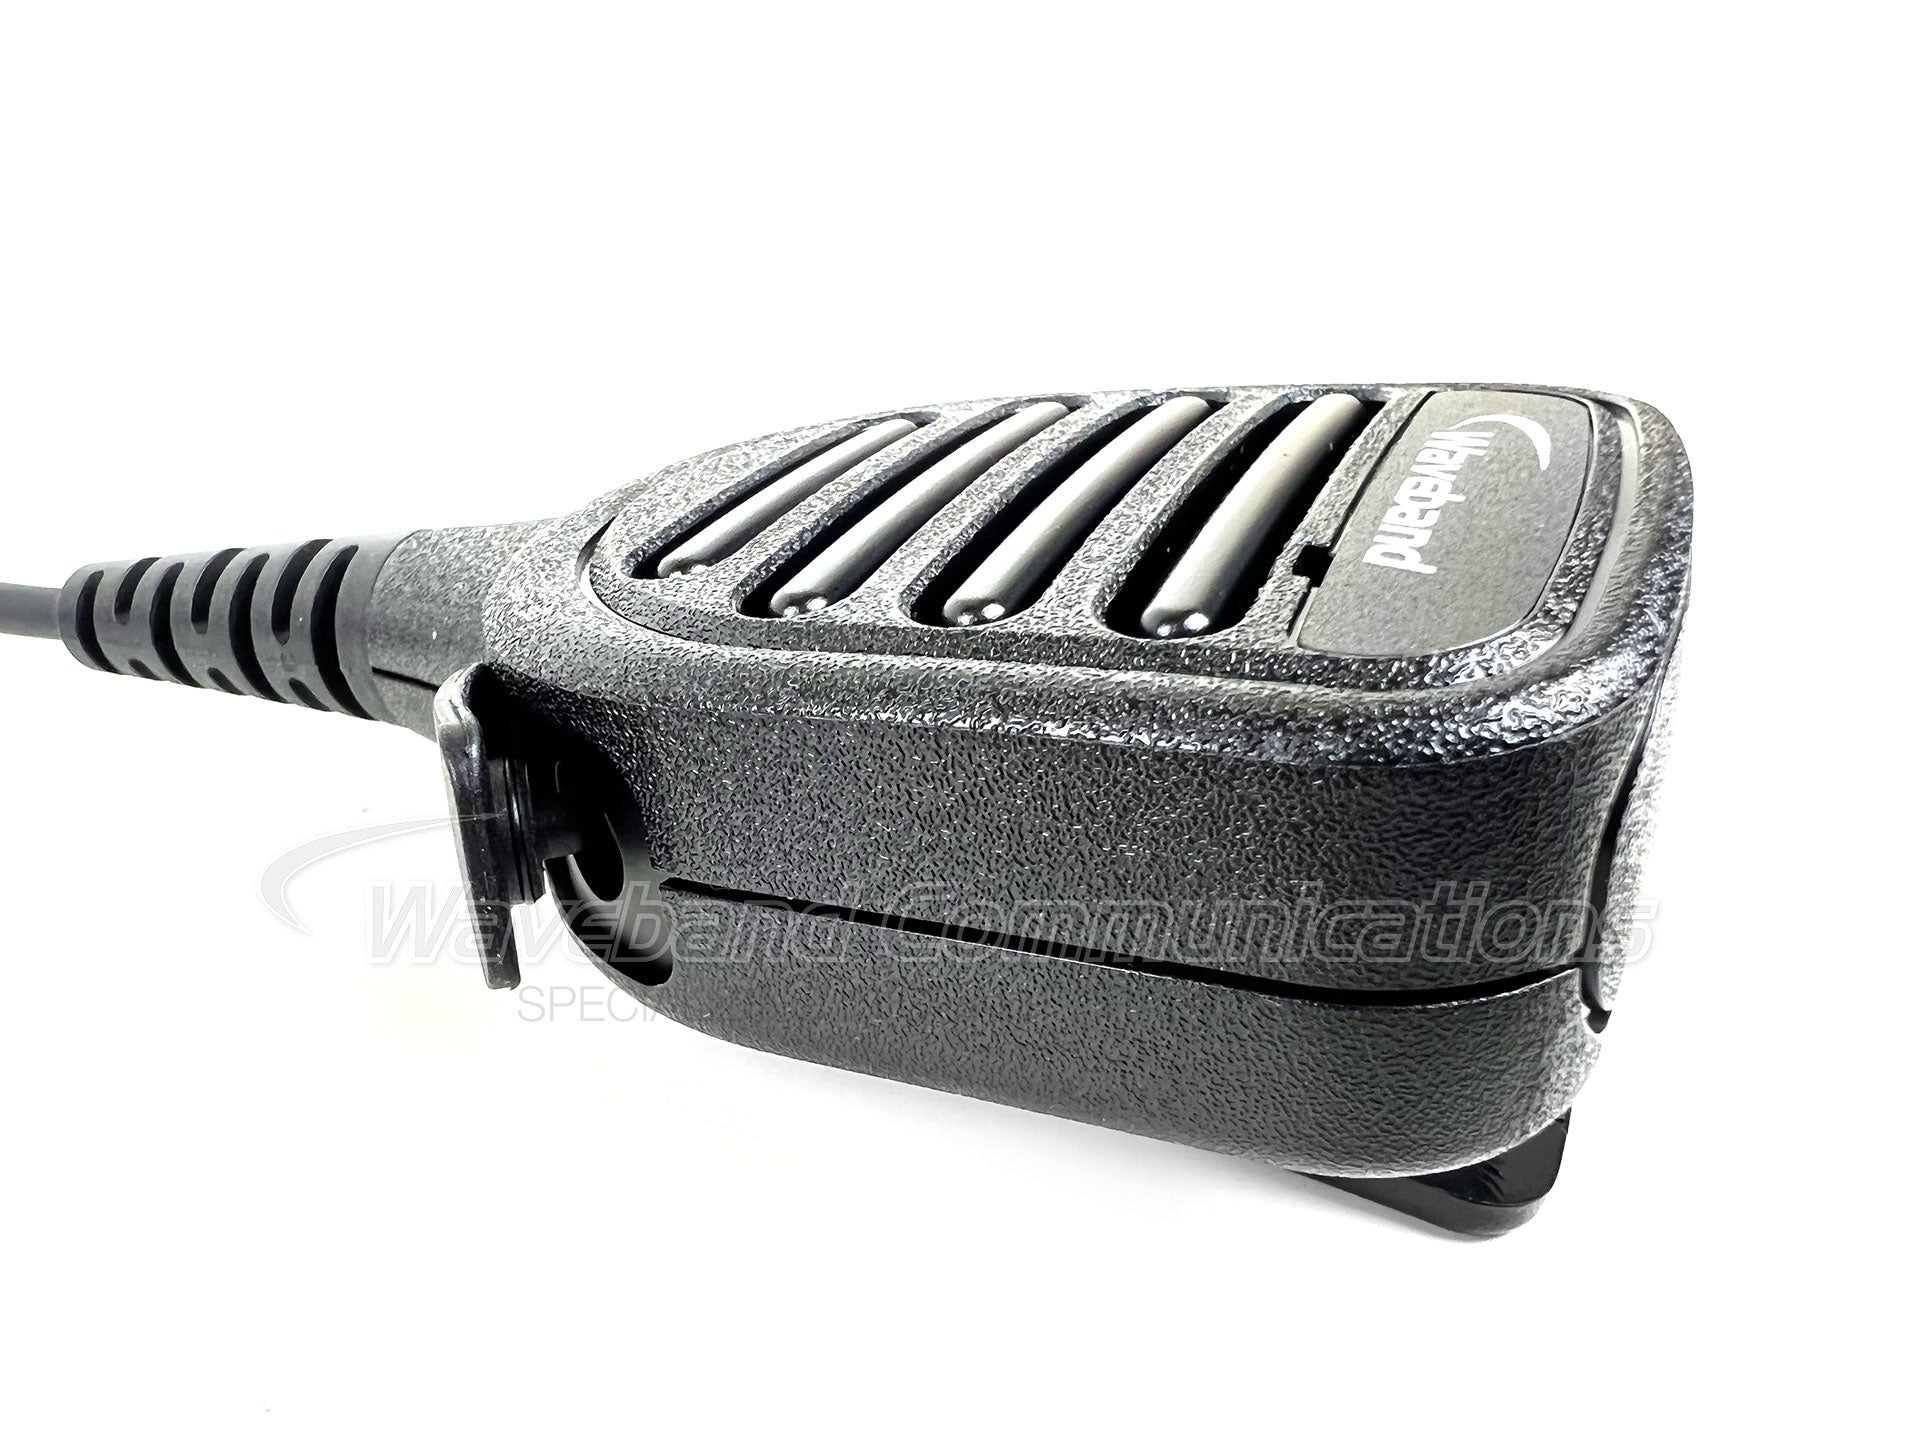 Microfone de alto-falante remoto PMMN4025 para rádios Motorola XPR Trbo. WB # WX-8010-M-P08